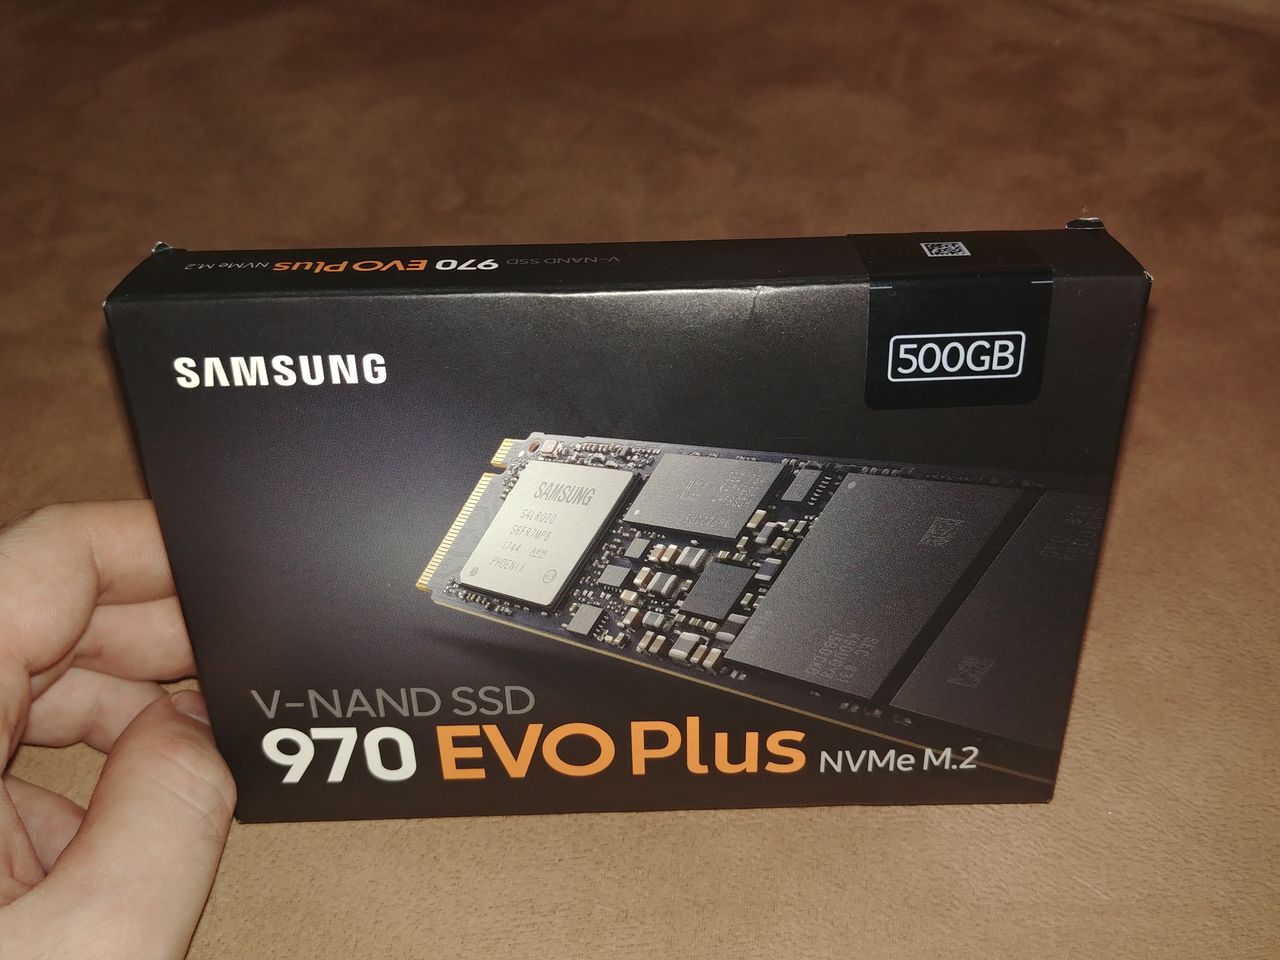 Ssd samsung 970 evo plus купить. Samsung 970 EVO Plus 500gb. SSD Samsung 970 EVO Plus 500. Samsung 970 EVO Plus [MZ-v7s500bw]. SSD 970 EVO Plus 500gb.